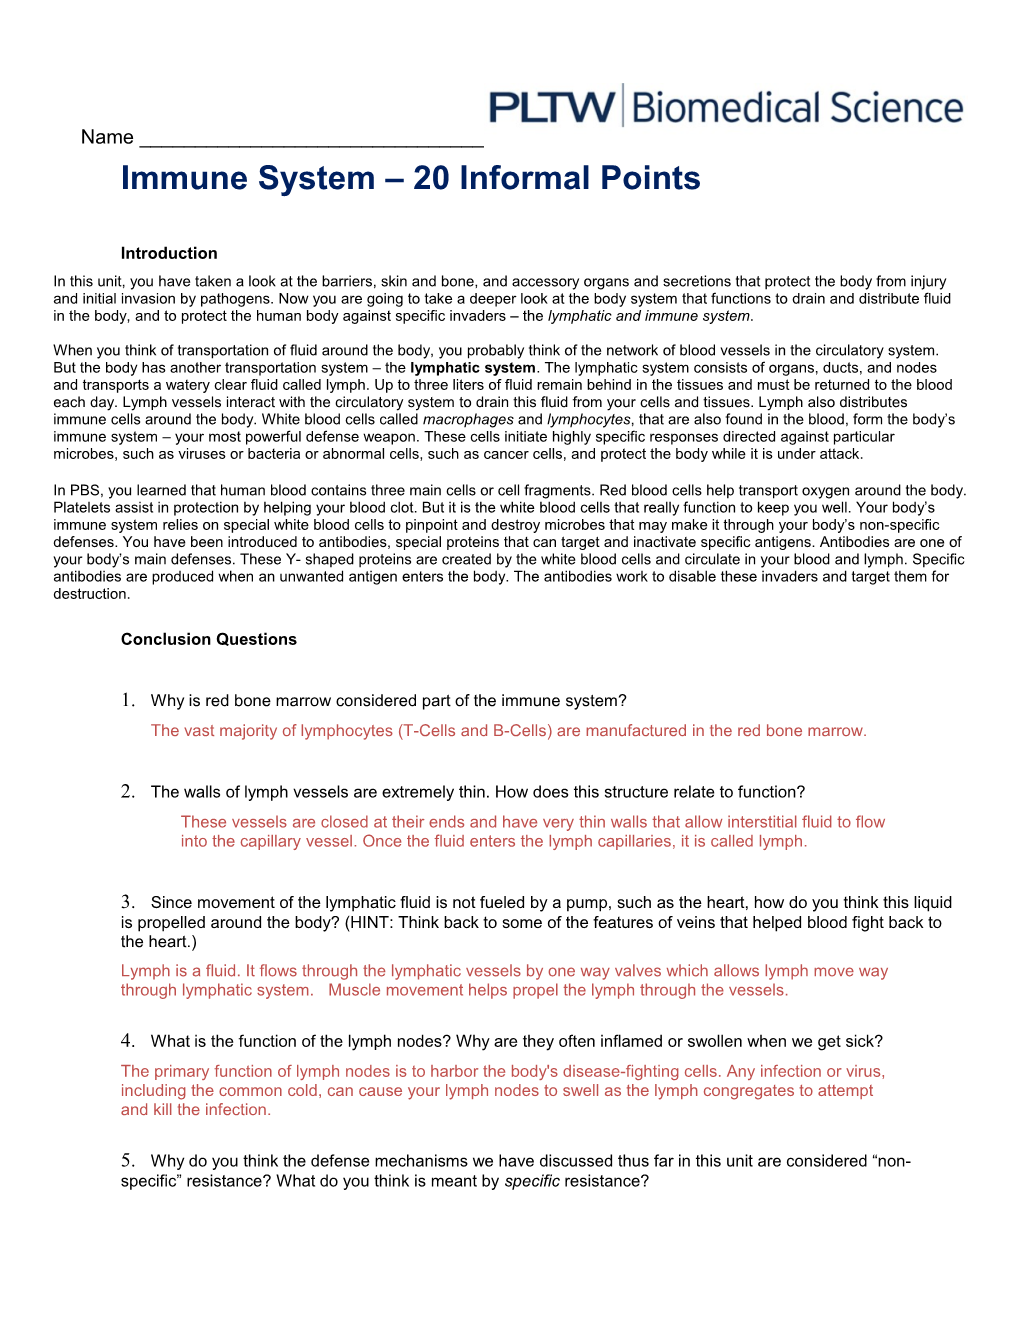 Immune System 20 Informal Points